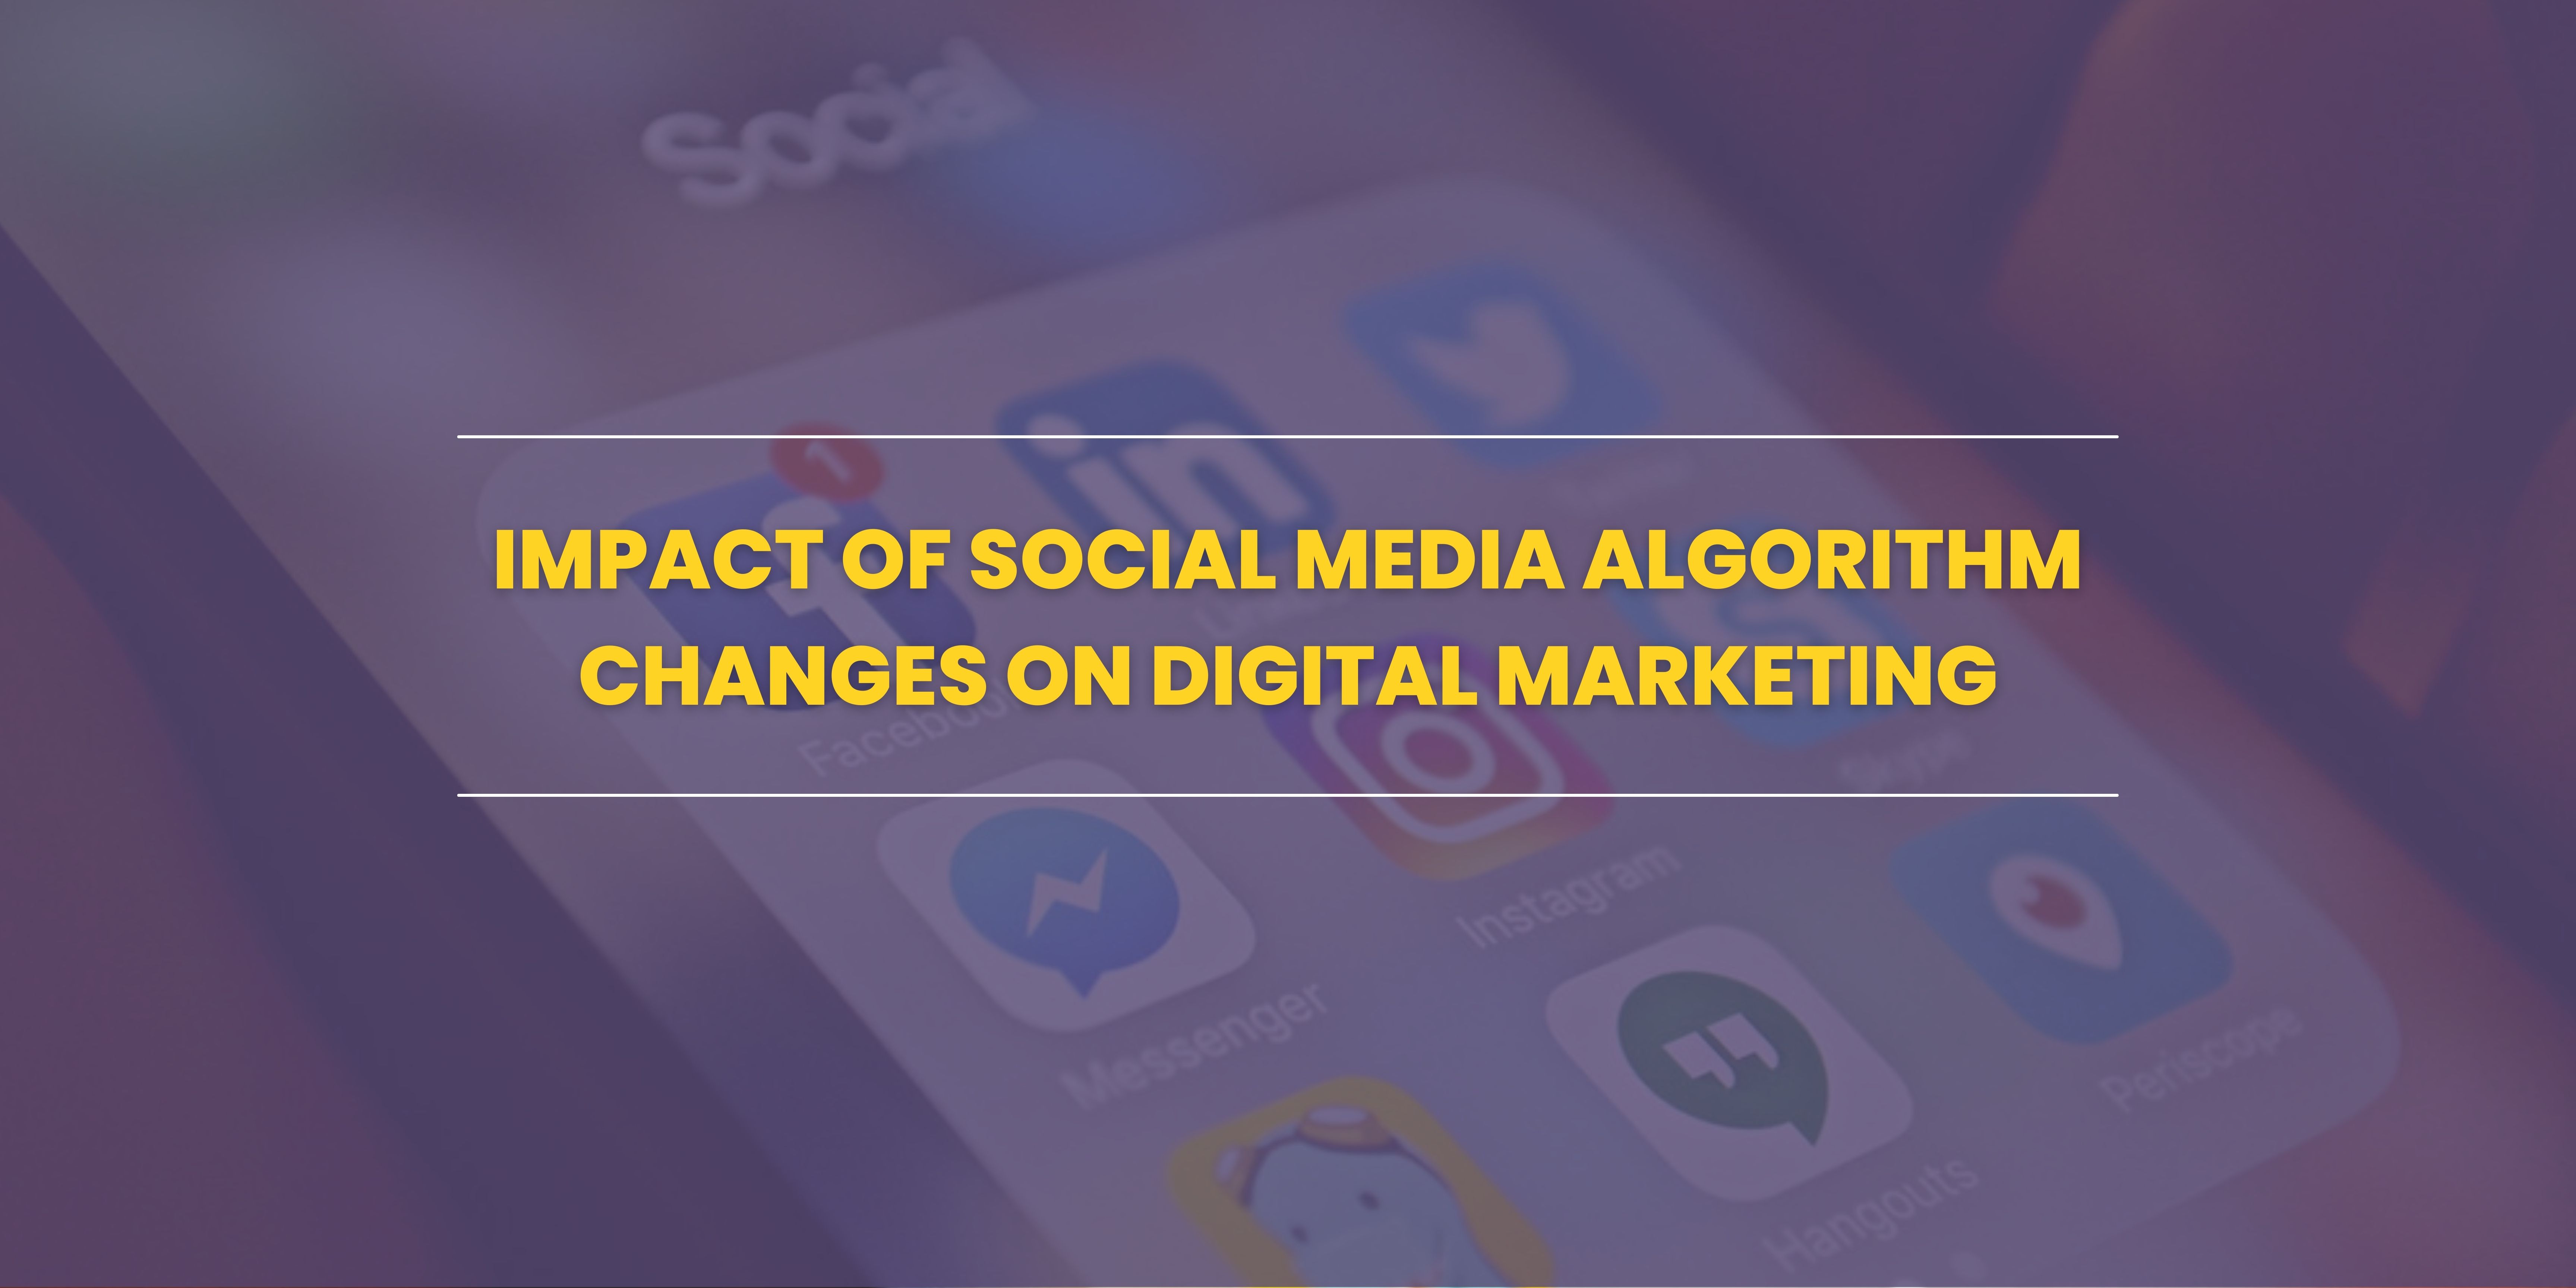 The Impact of Social Media Algorithm Changes on Digital Marketing